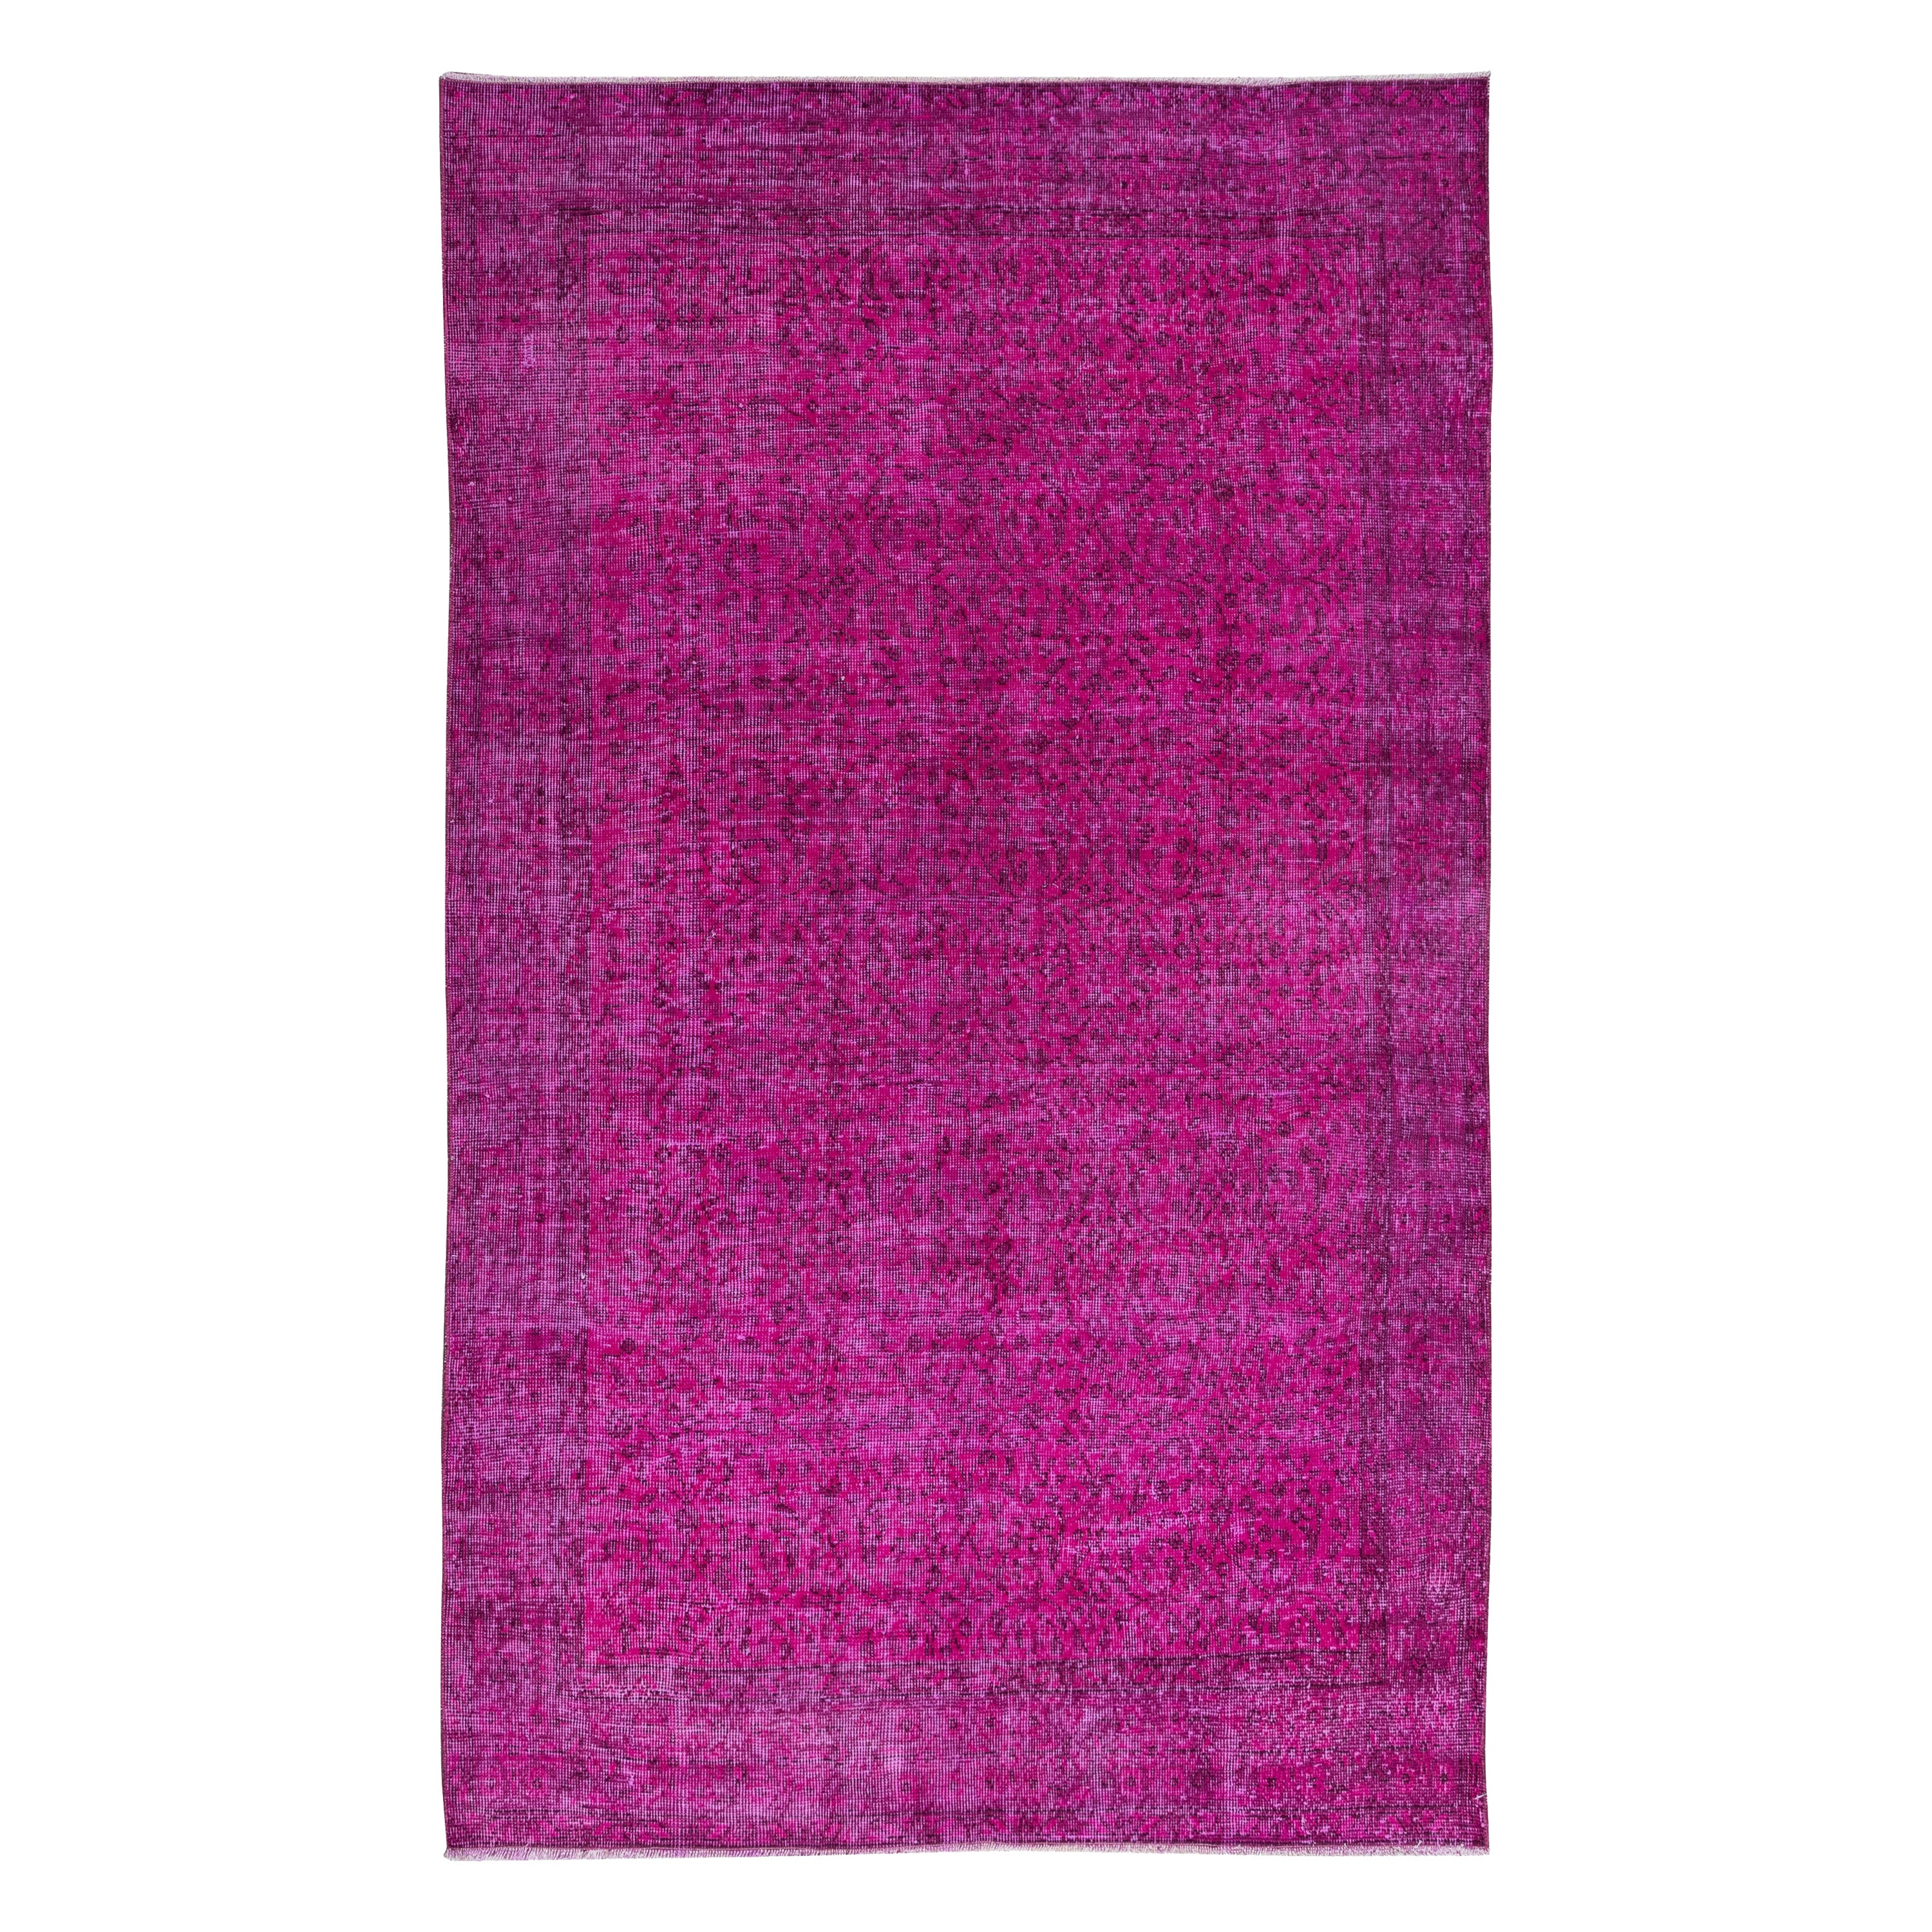 5.2x8.4 Ft Rosa Teppich aus der Türkei, prächtiger 4 moderner Innenraumteppich, handgefertigter geblümter Teppich